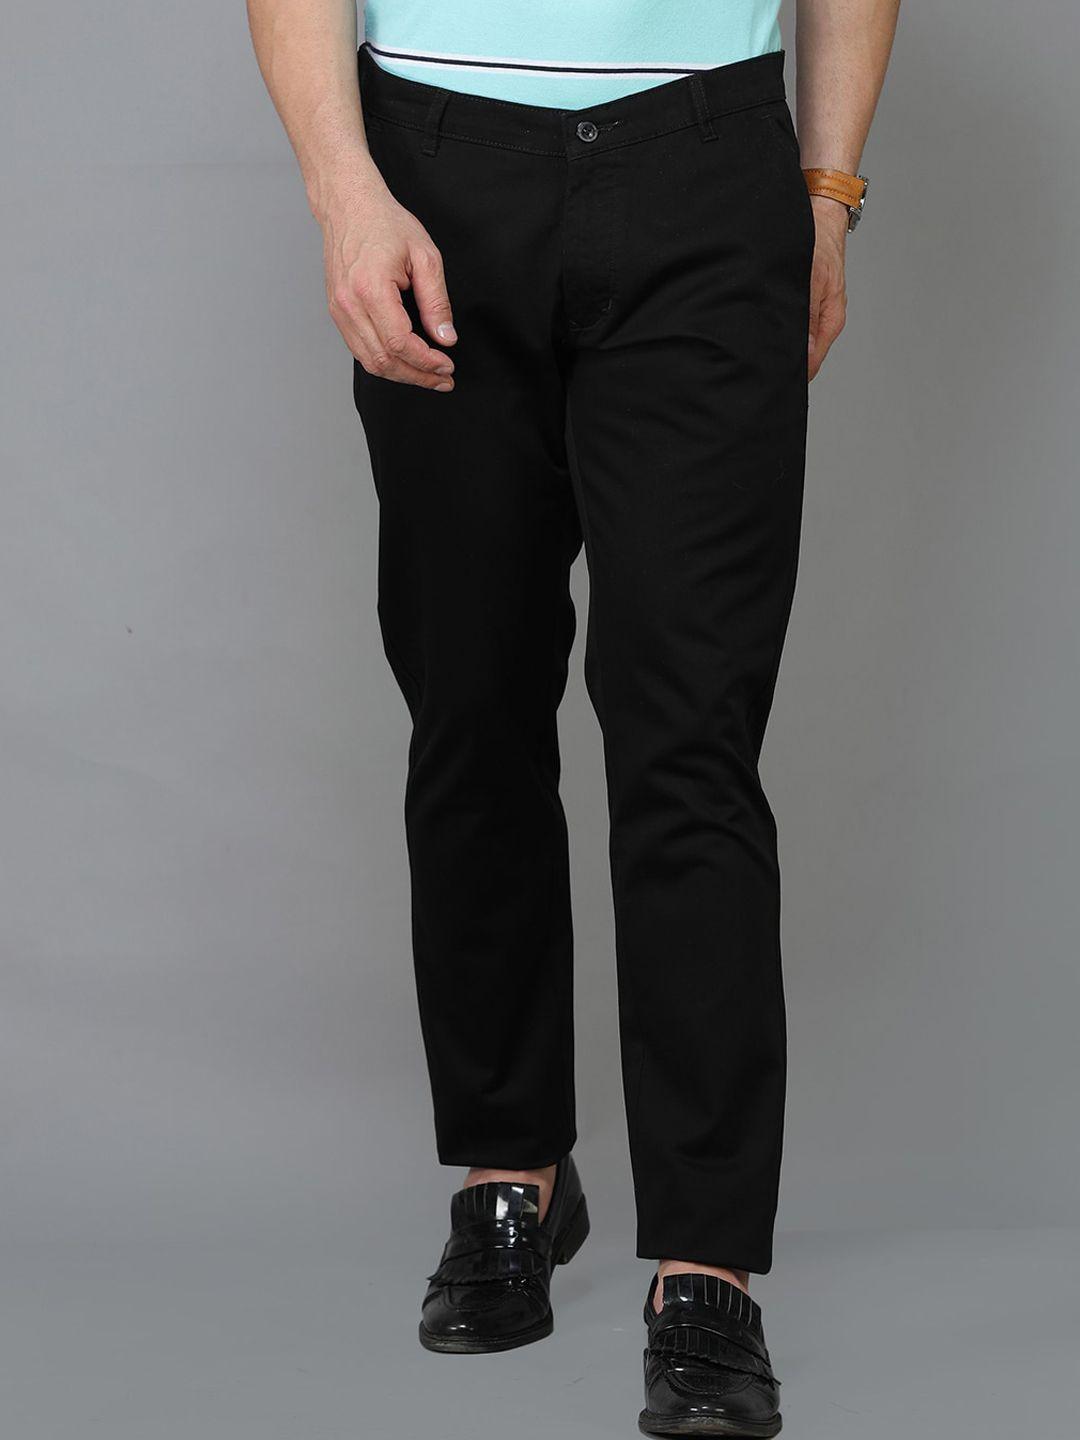 tqs-men-black-smart-slim-fit-chinos-trousers